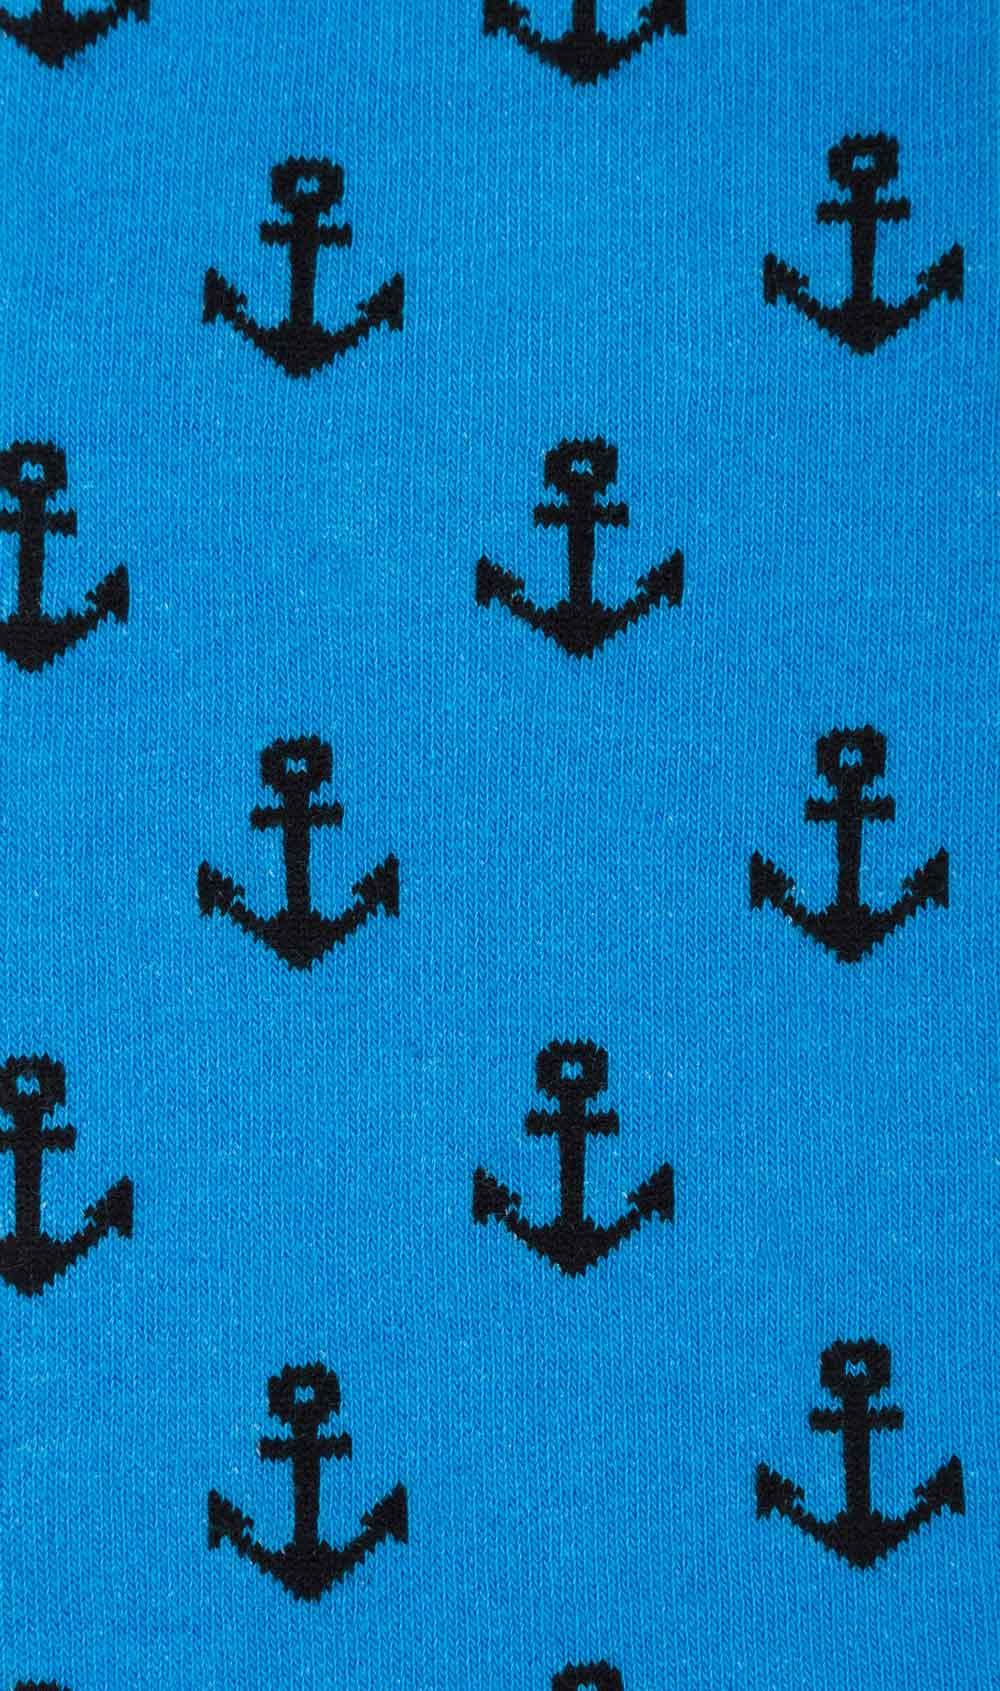 Azure Blue Anchor Socks Fabric